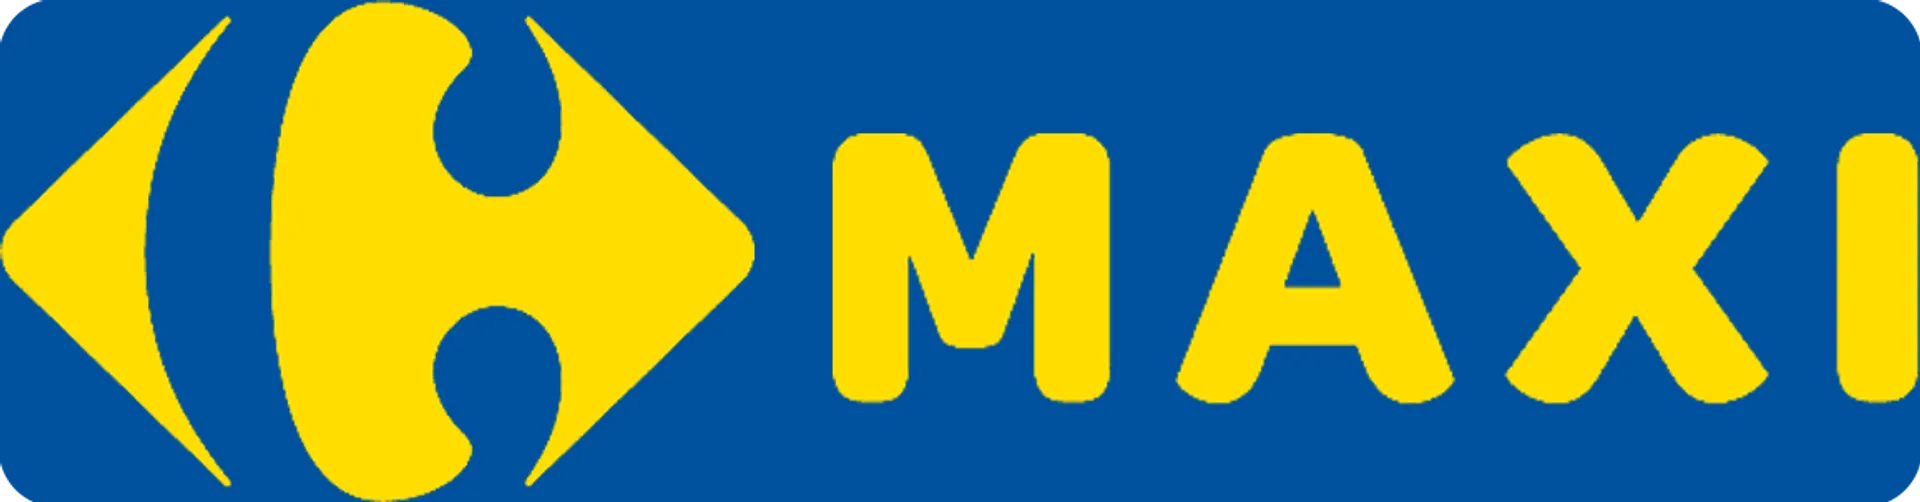 CARREFOUR MAXI logo